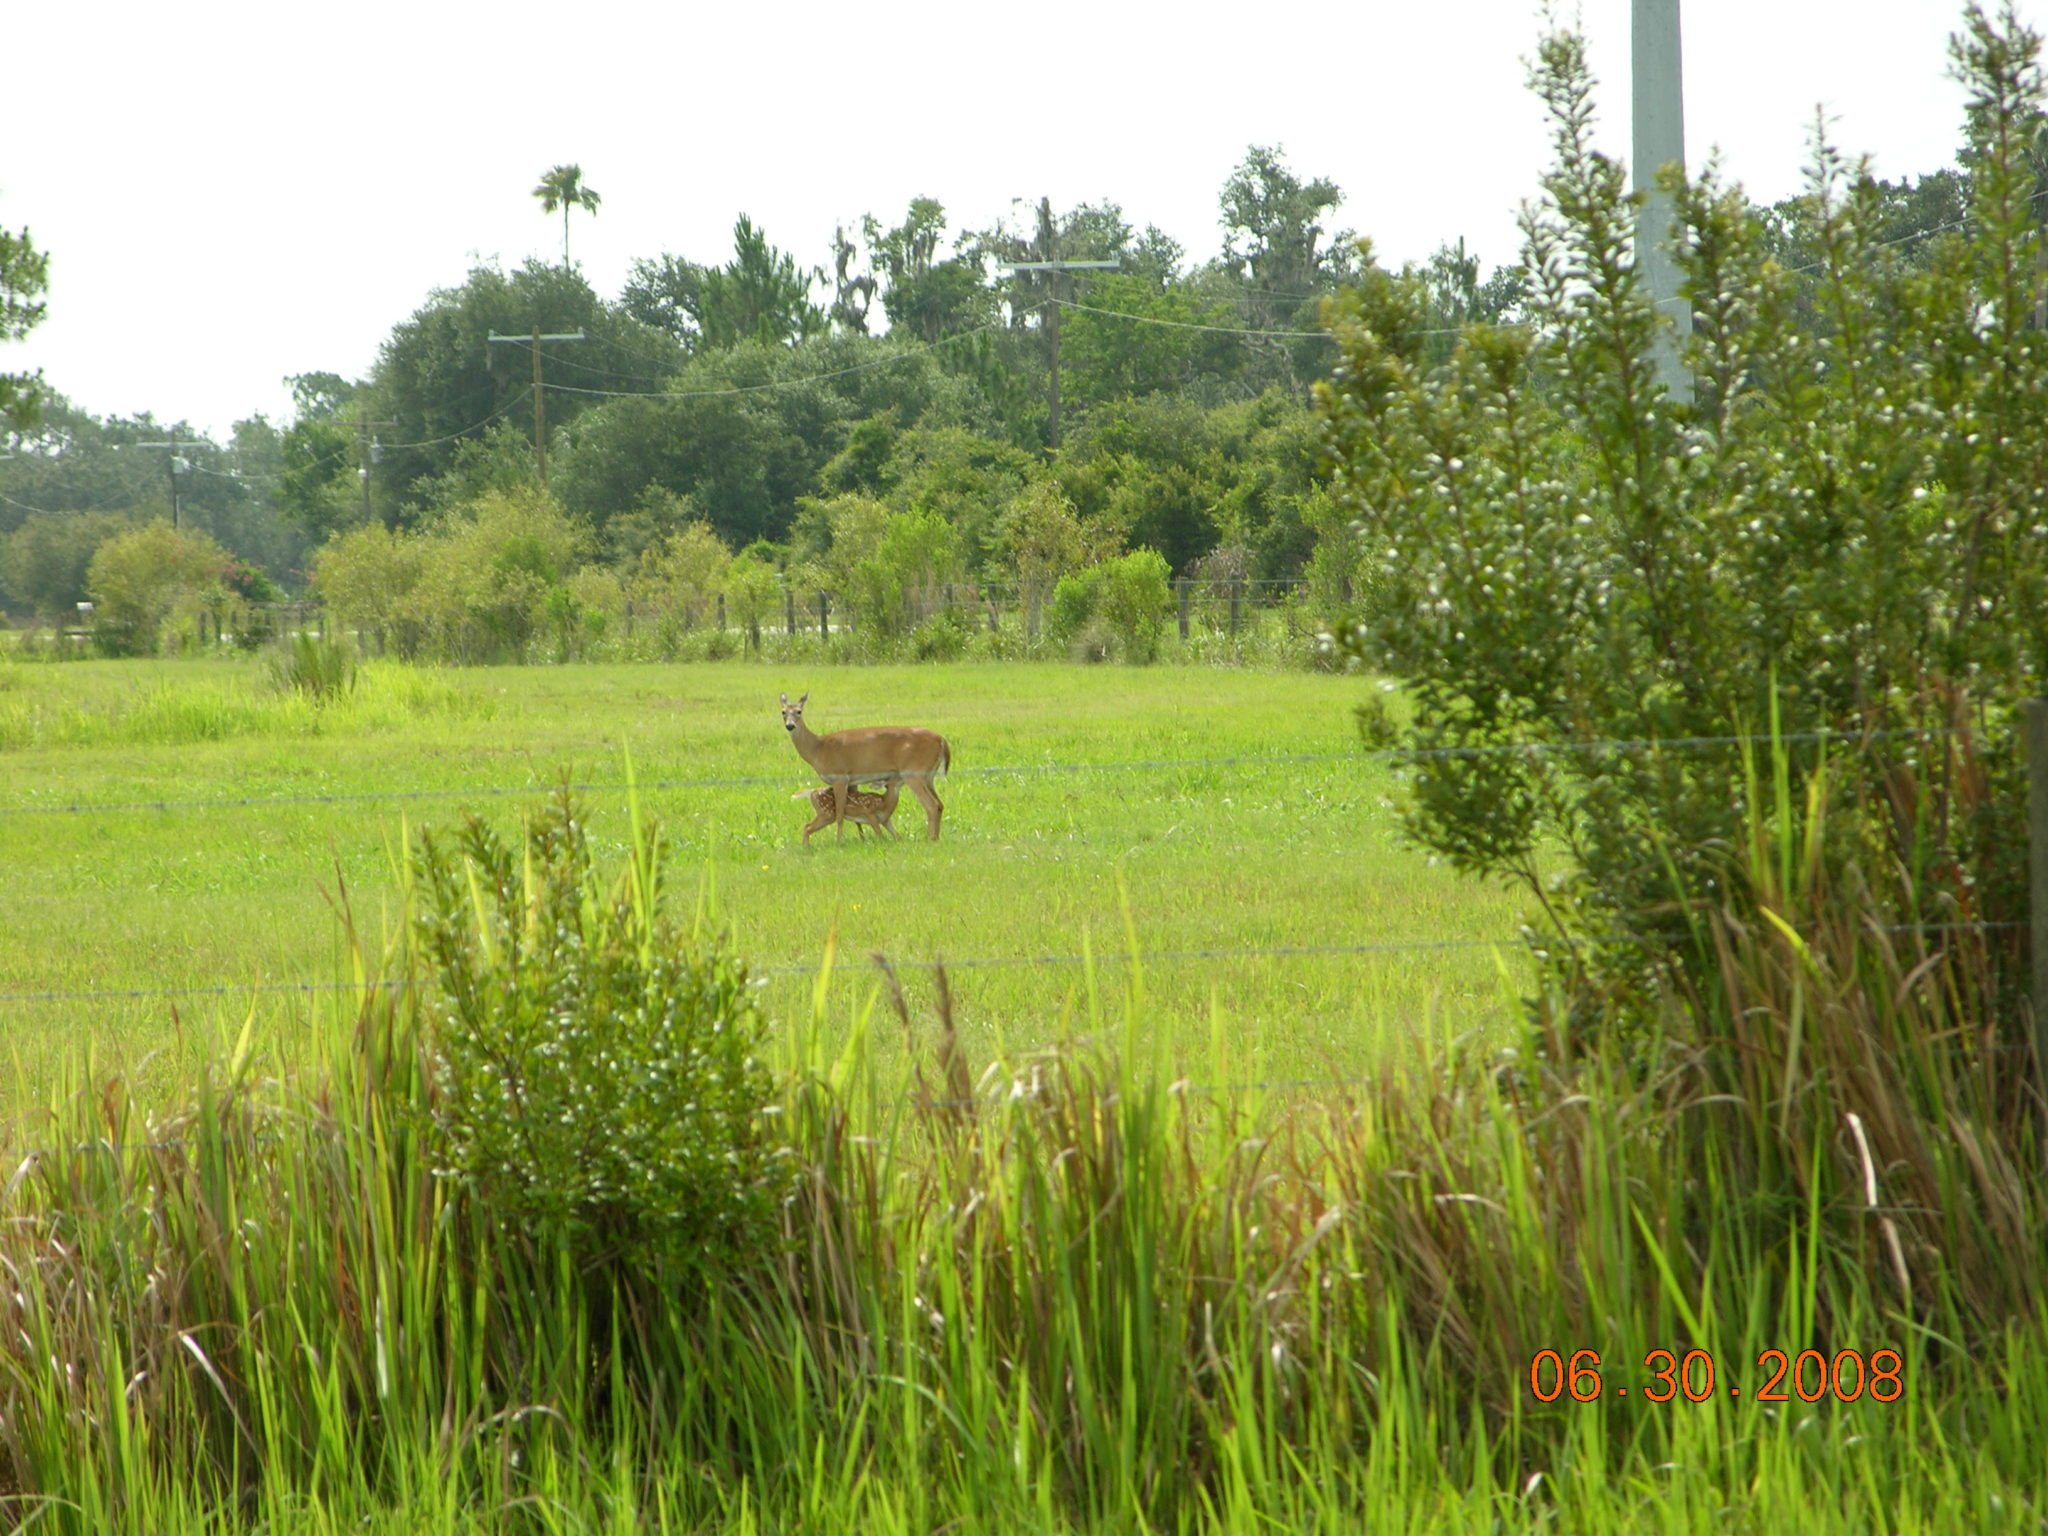 Deer in meadow